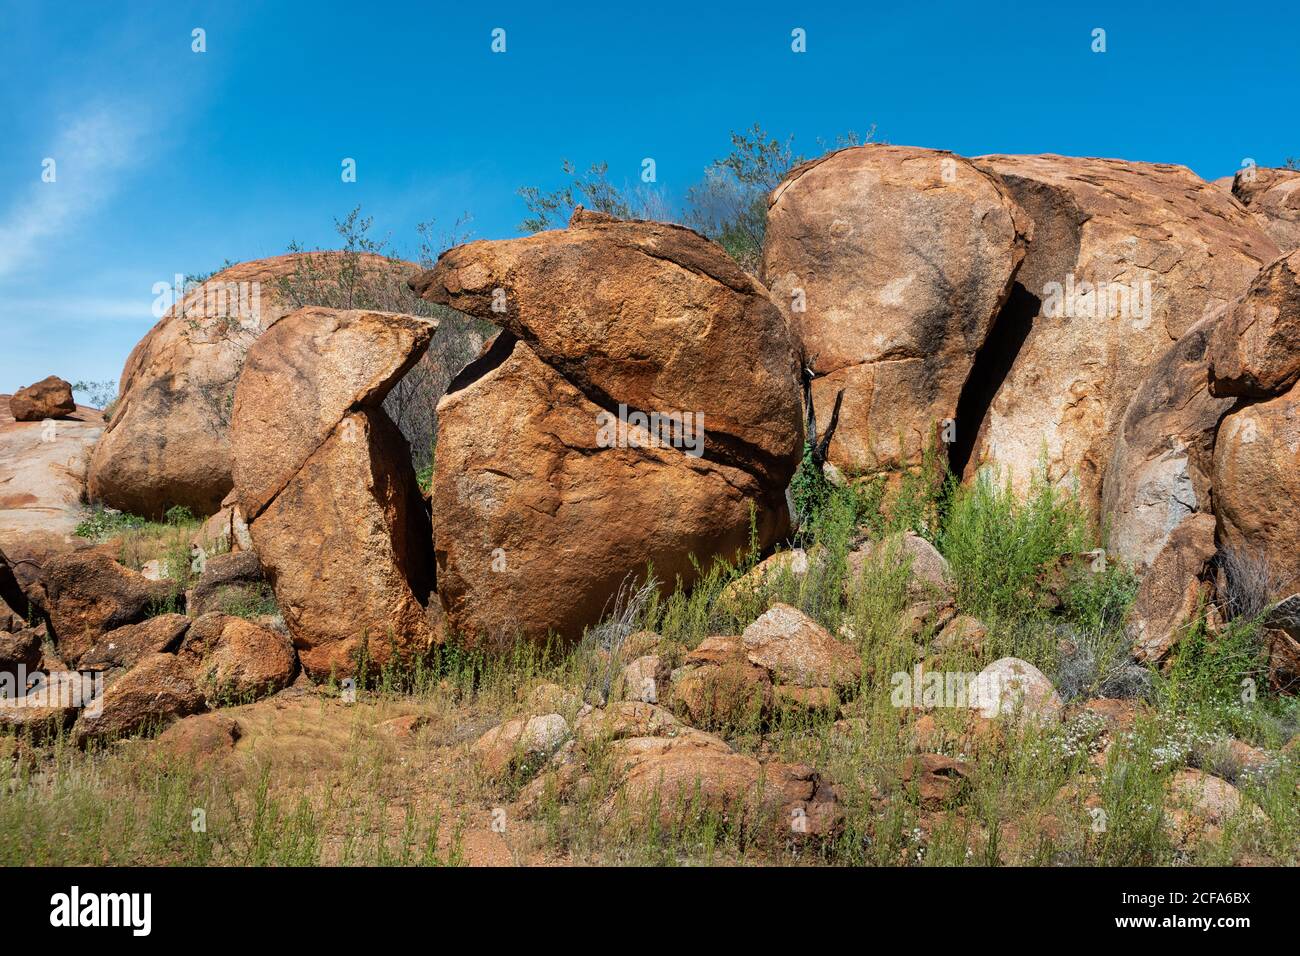 Devils Marbles, sacred aboriginal place with massive granite boulders strewn across a valley. Symbol of Australia's outback. Aboriginal name: Karlu Ka Stock Photo